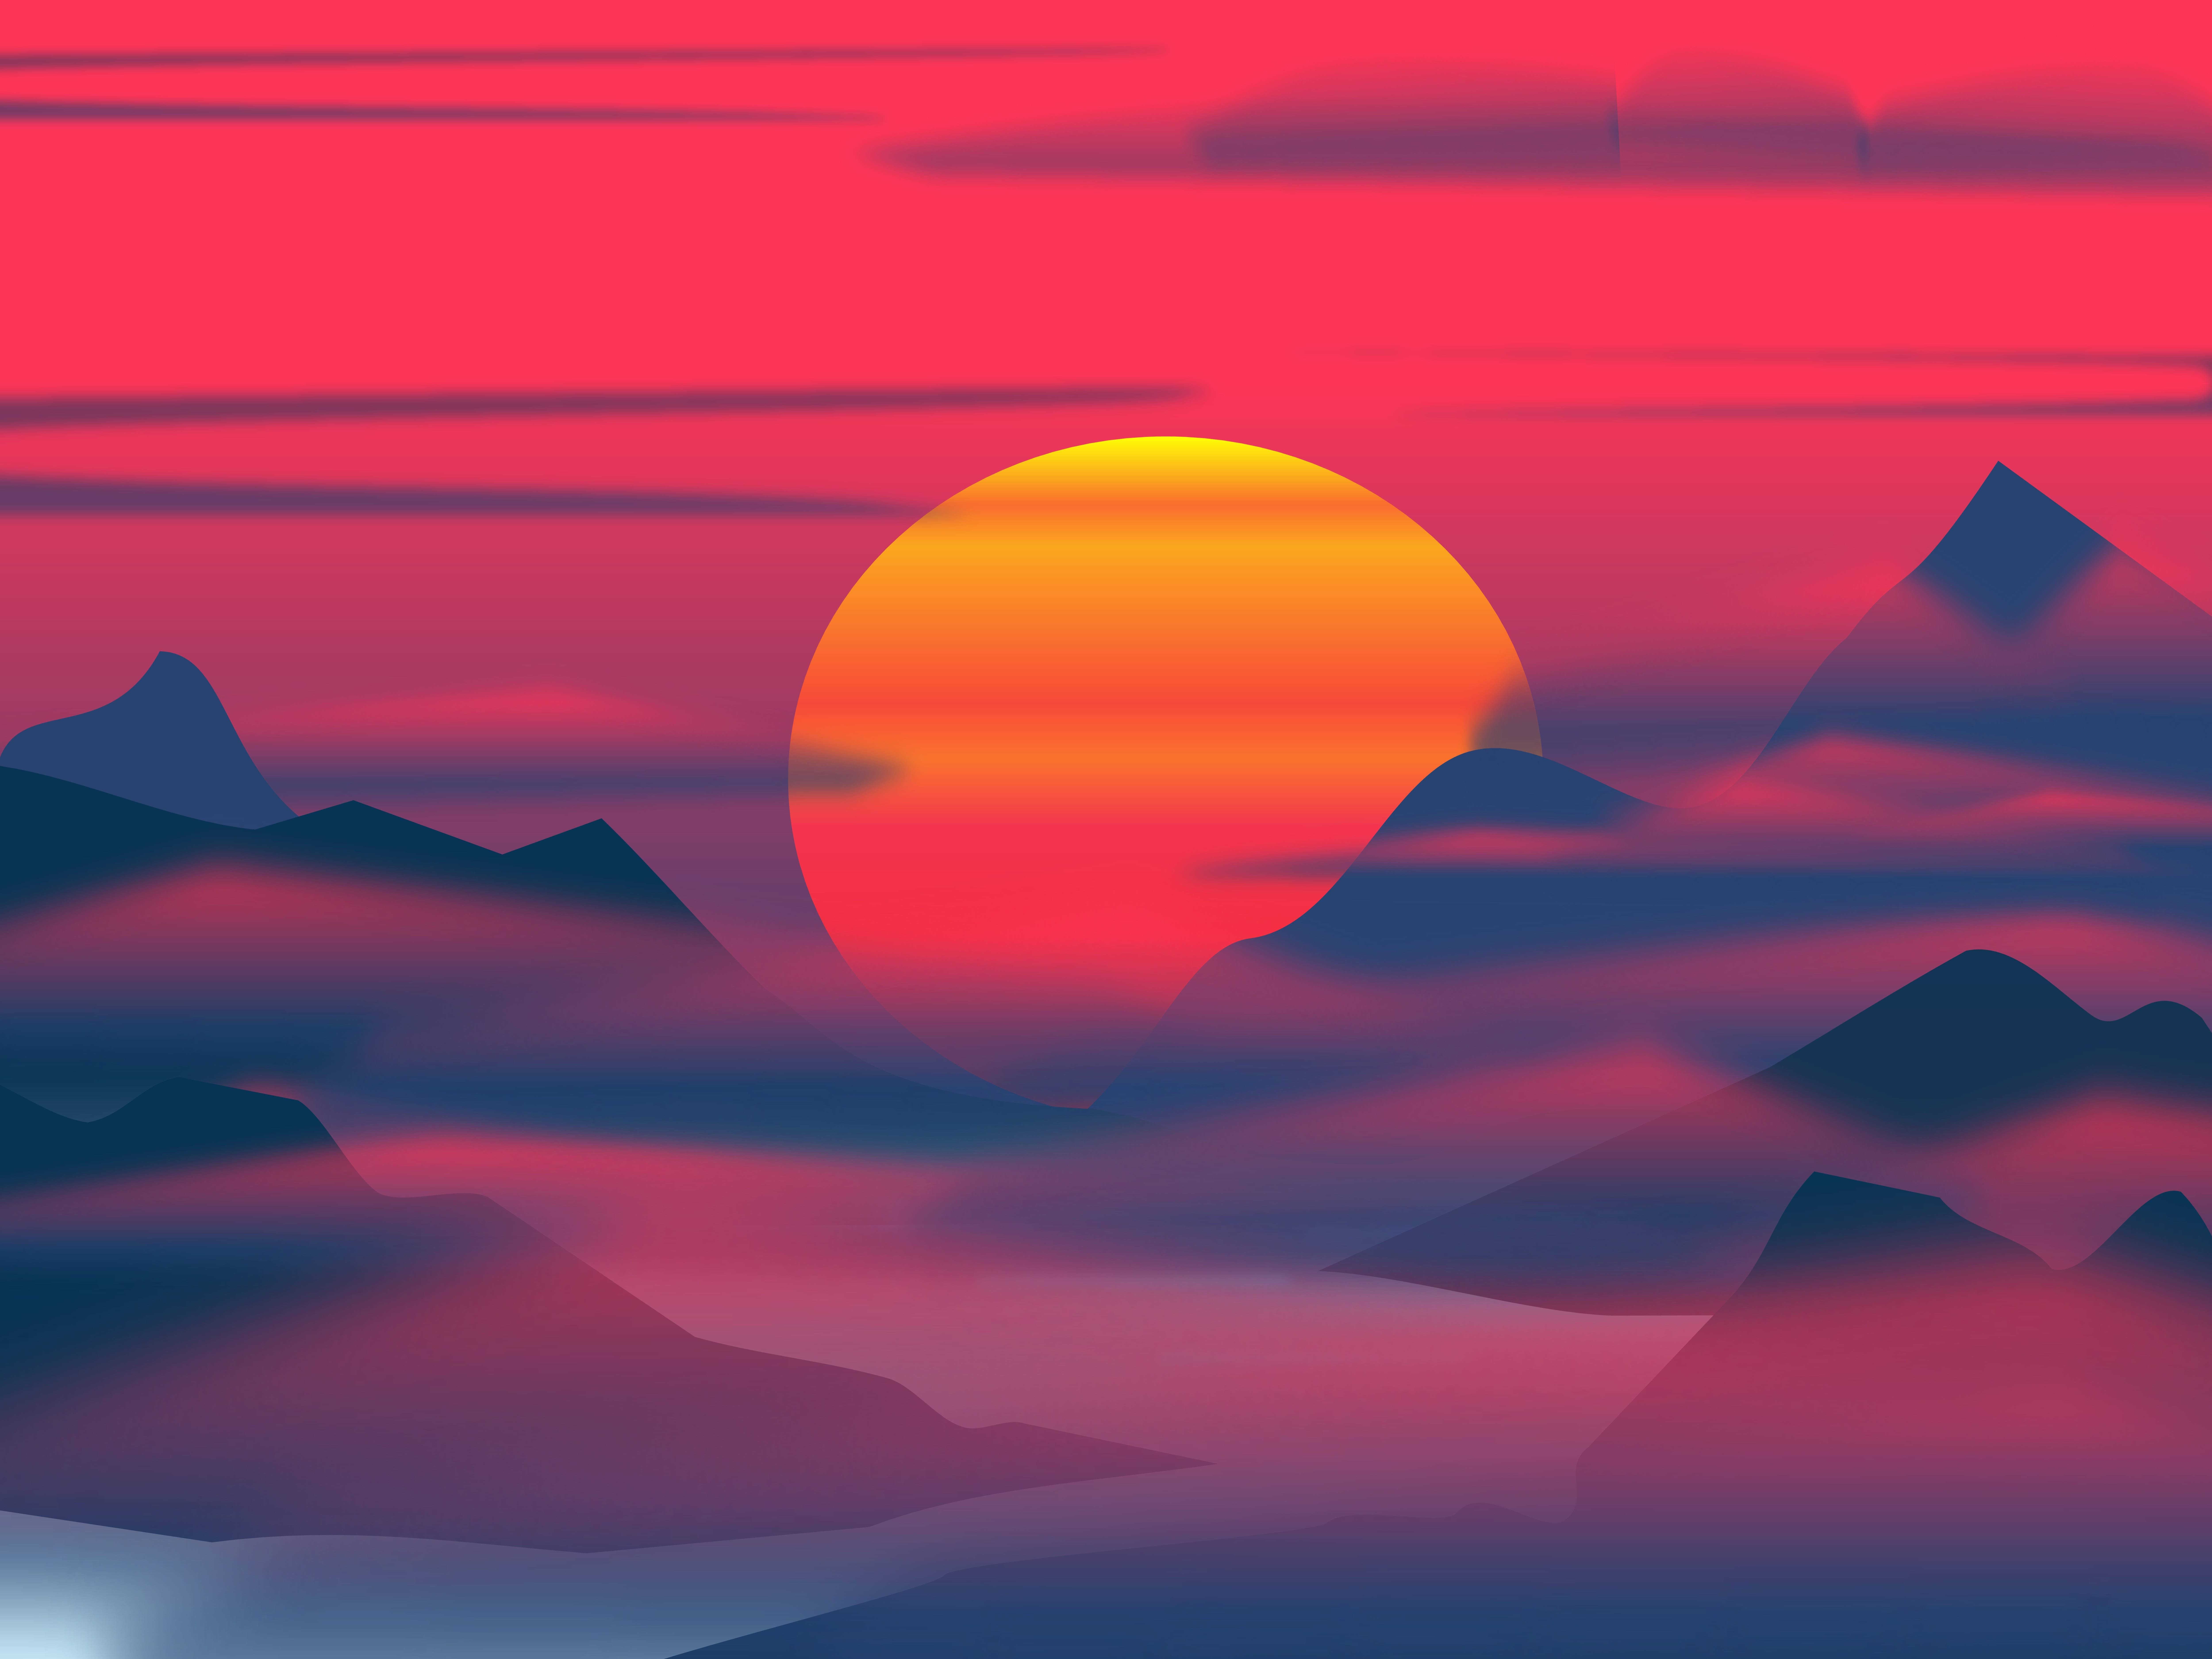 Sunrise Sunset Minimal 10k, HD Artist, 4k Wallpaper, Image, Background, Photo and Picture